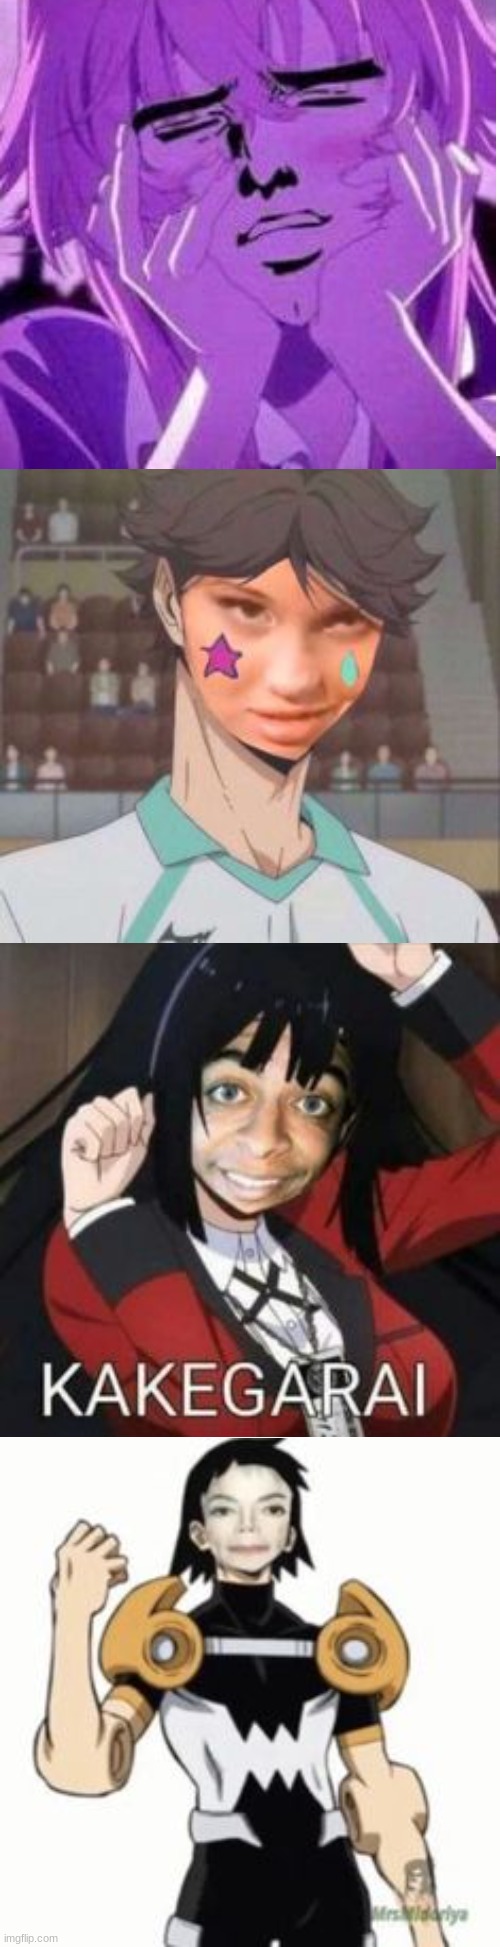 cursed anime images meme